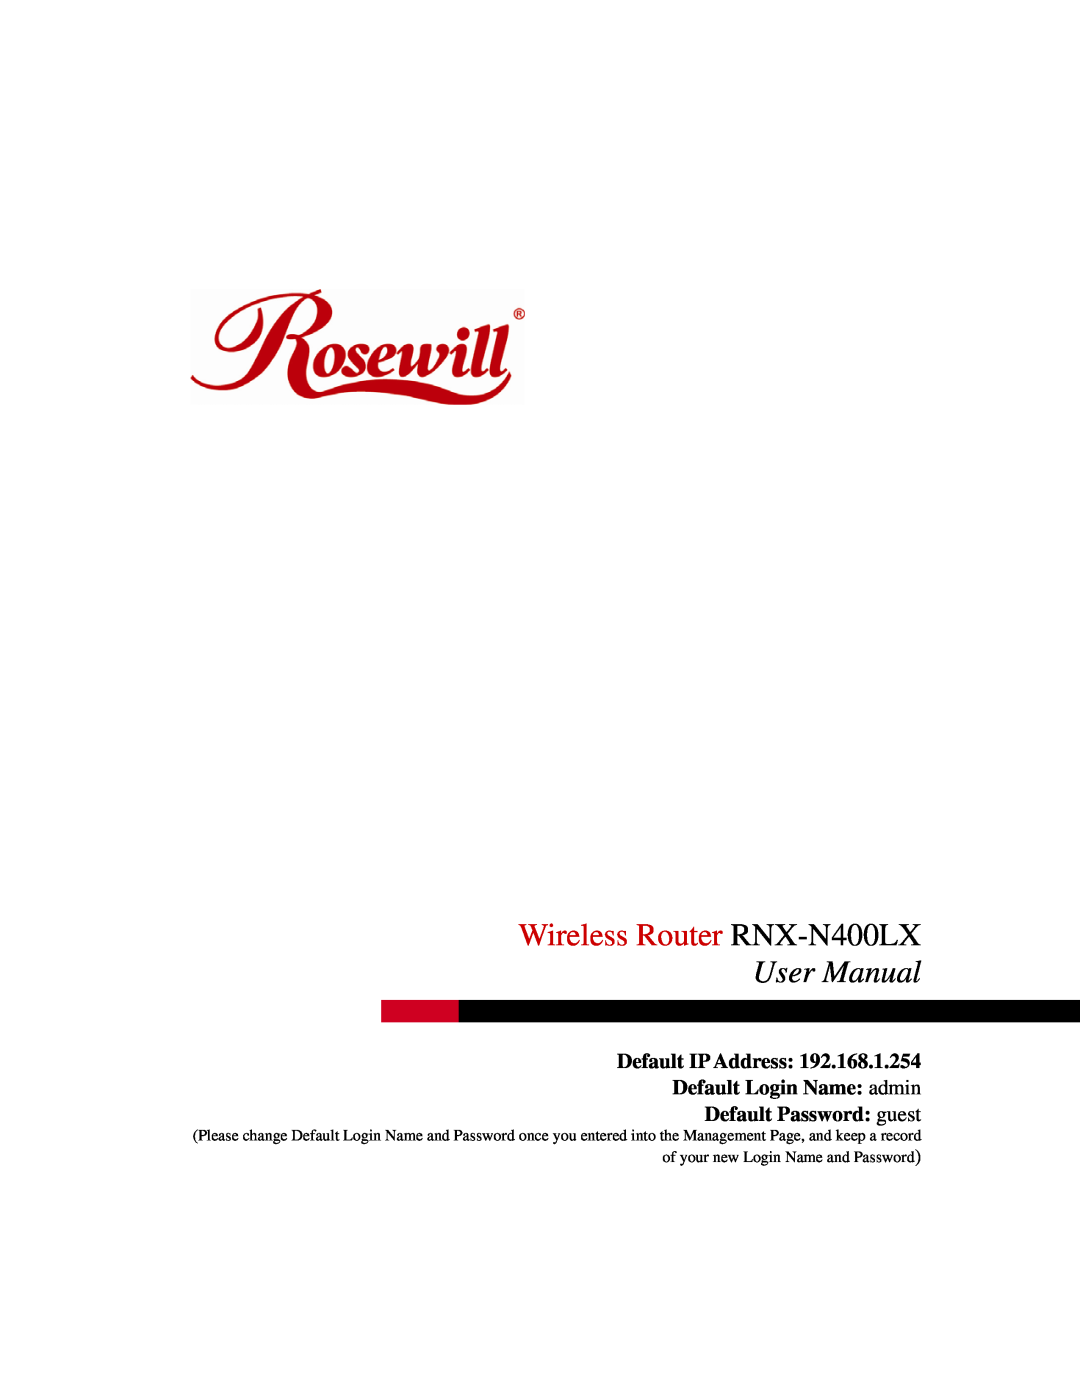 Rosewill RNX-N400LX user manual Default IP Address Default Login Name admin Default Password guest, User Manual 